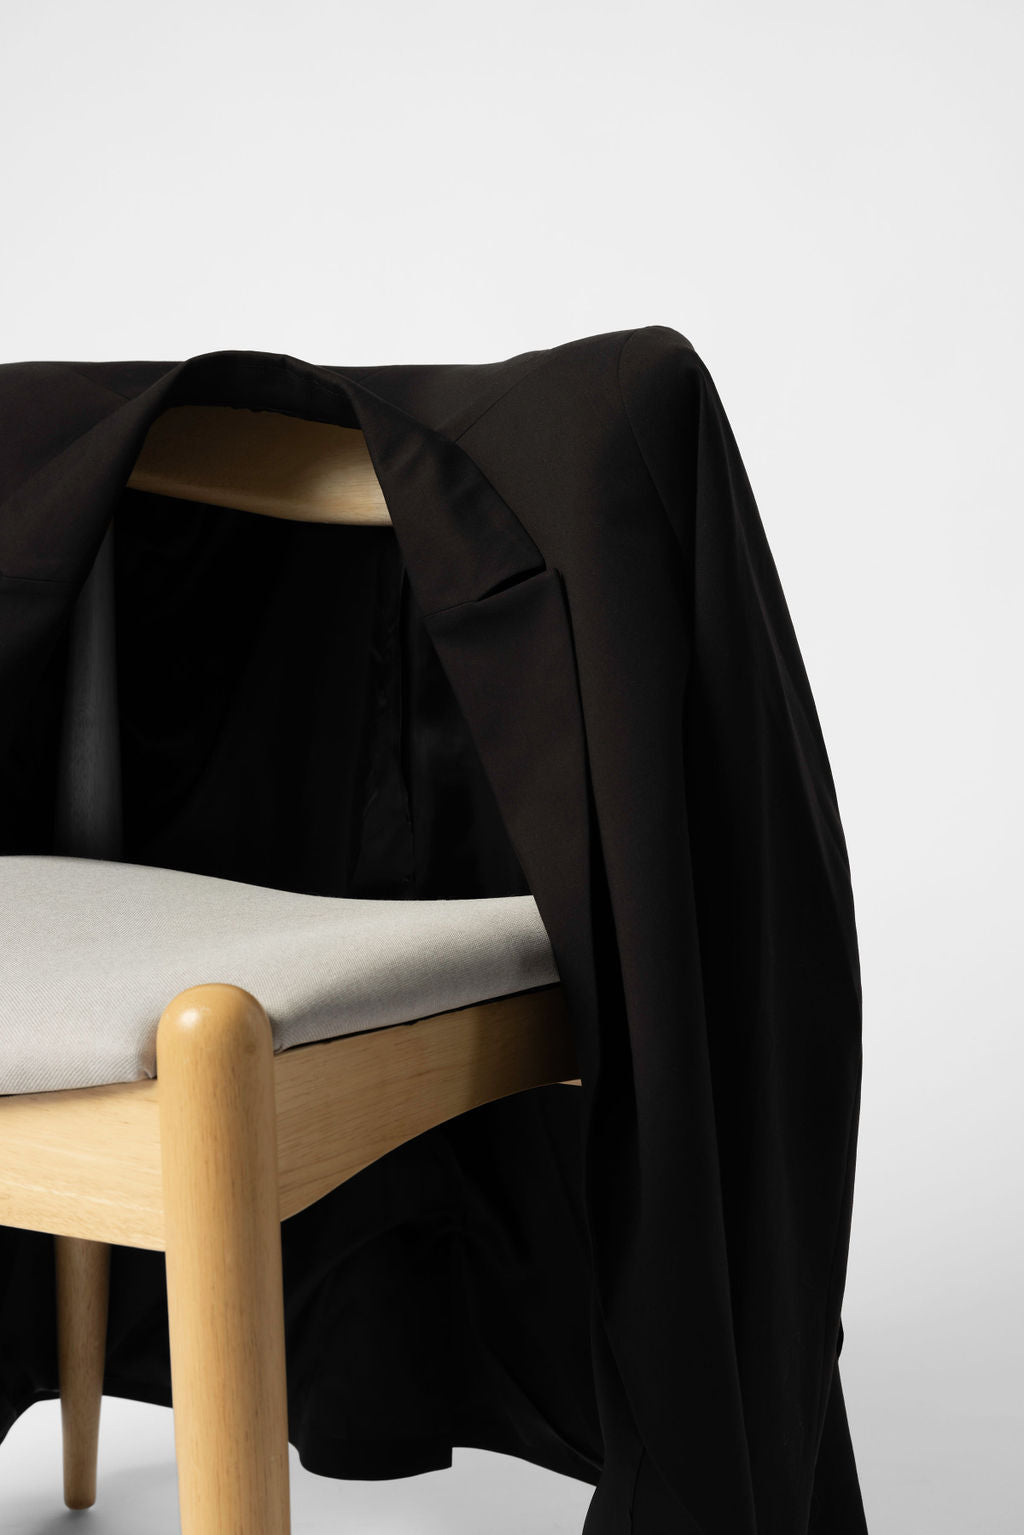 Minimalist Capsule Wardrobe Black Blazer Draped over a chair